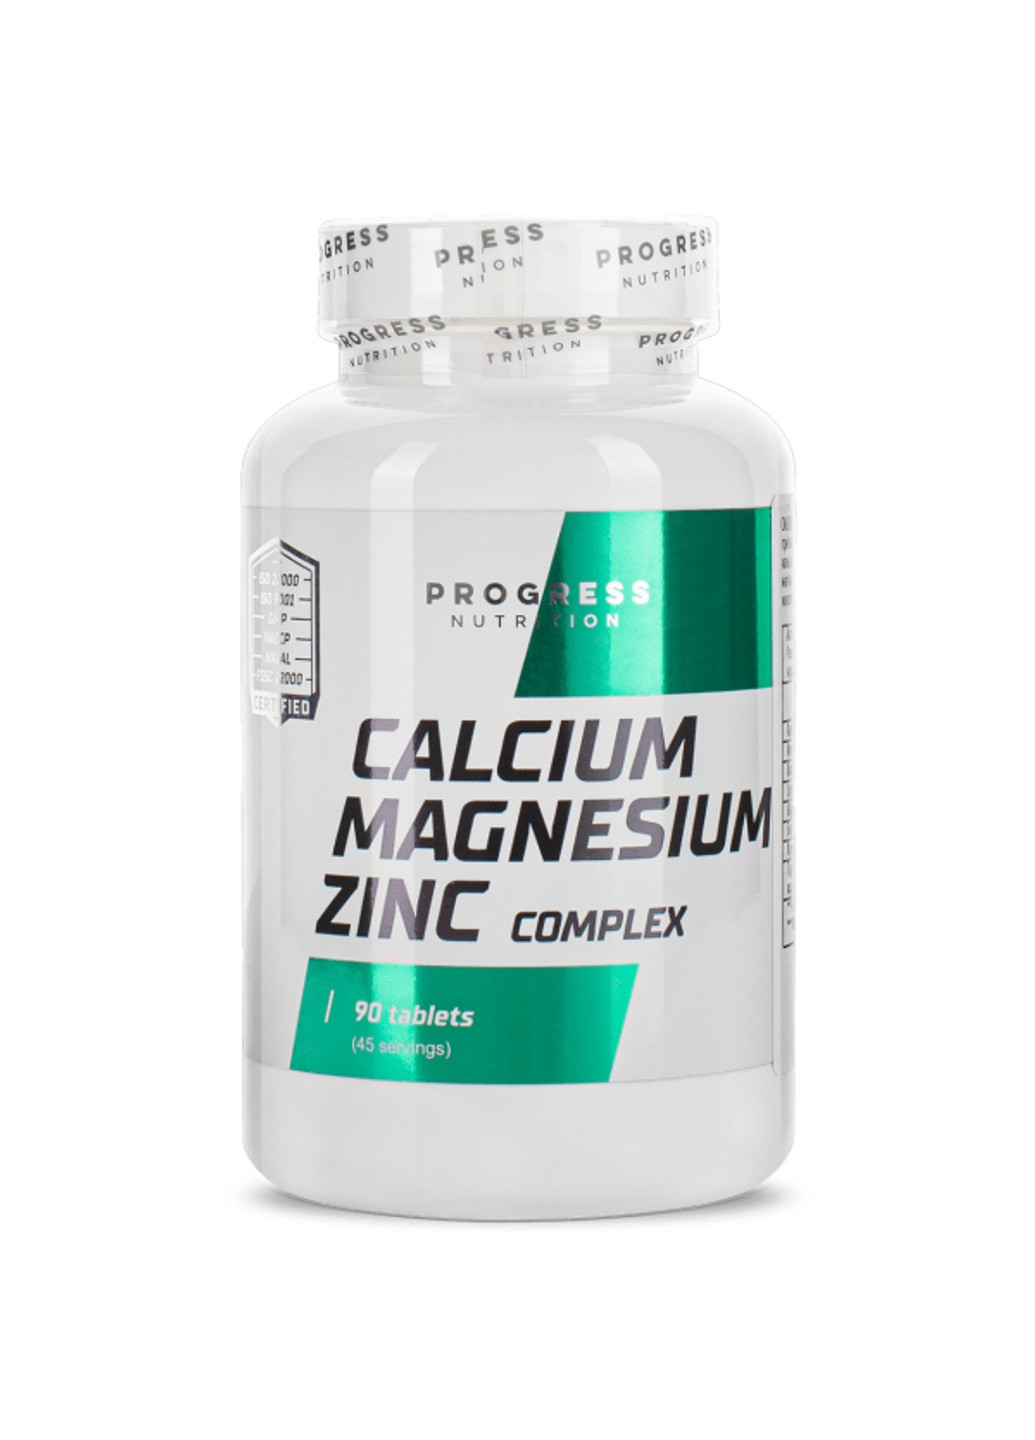 Кальций магний цинк Calcium Magnesium Zinc 90 таблеток Progress Nutrition (255408405)